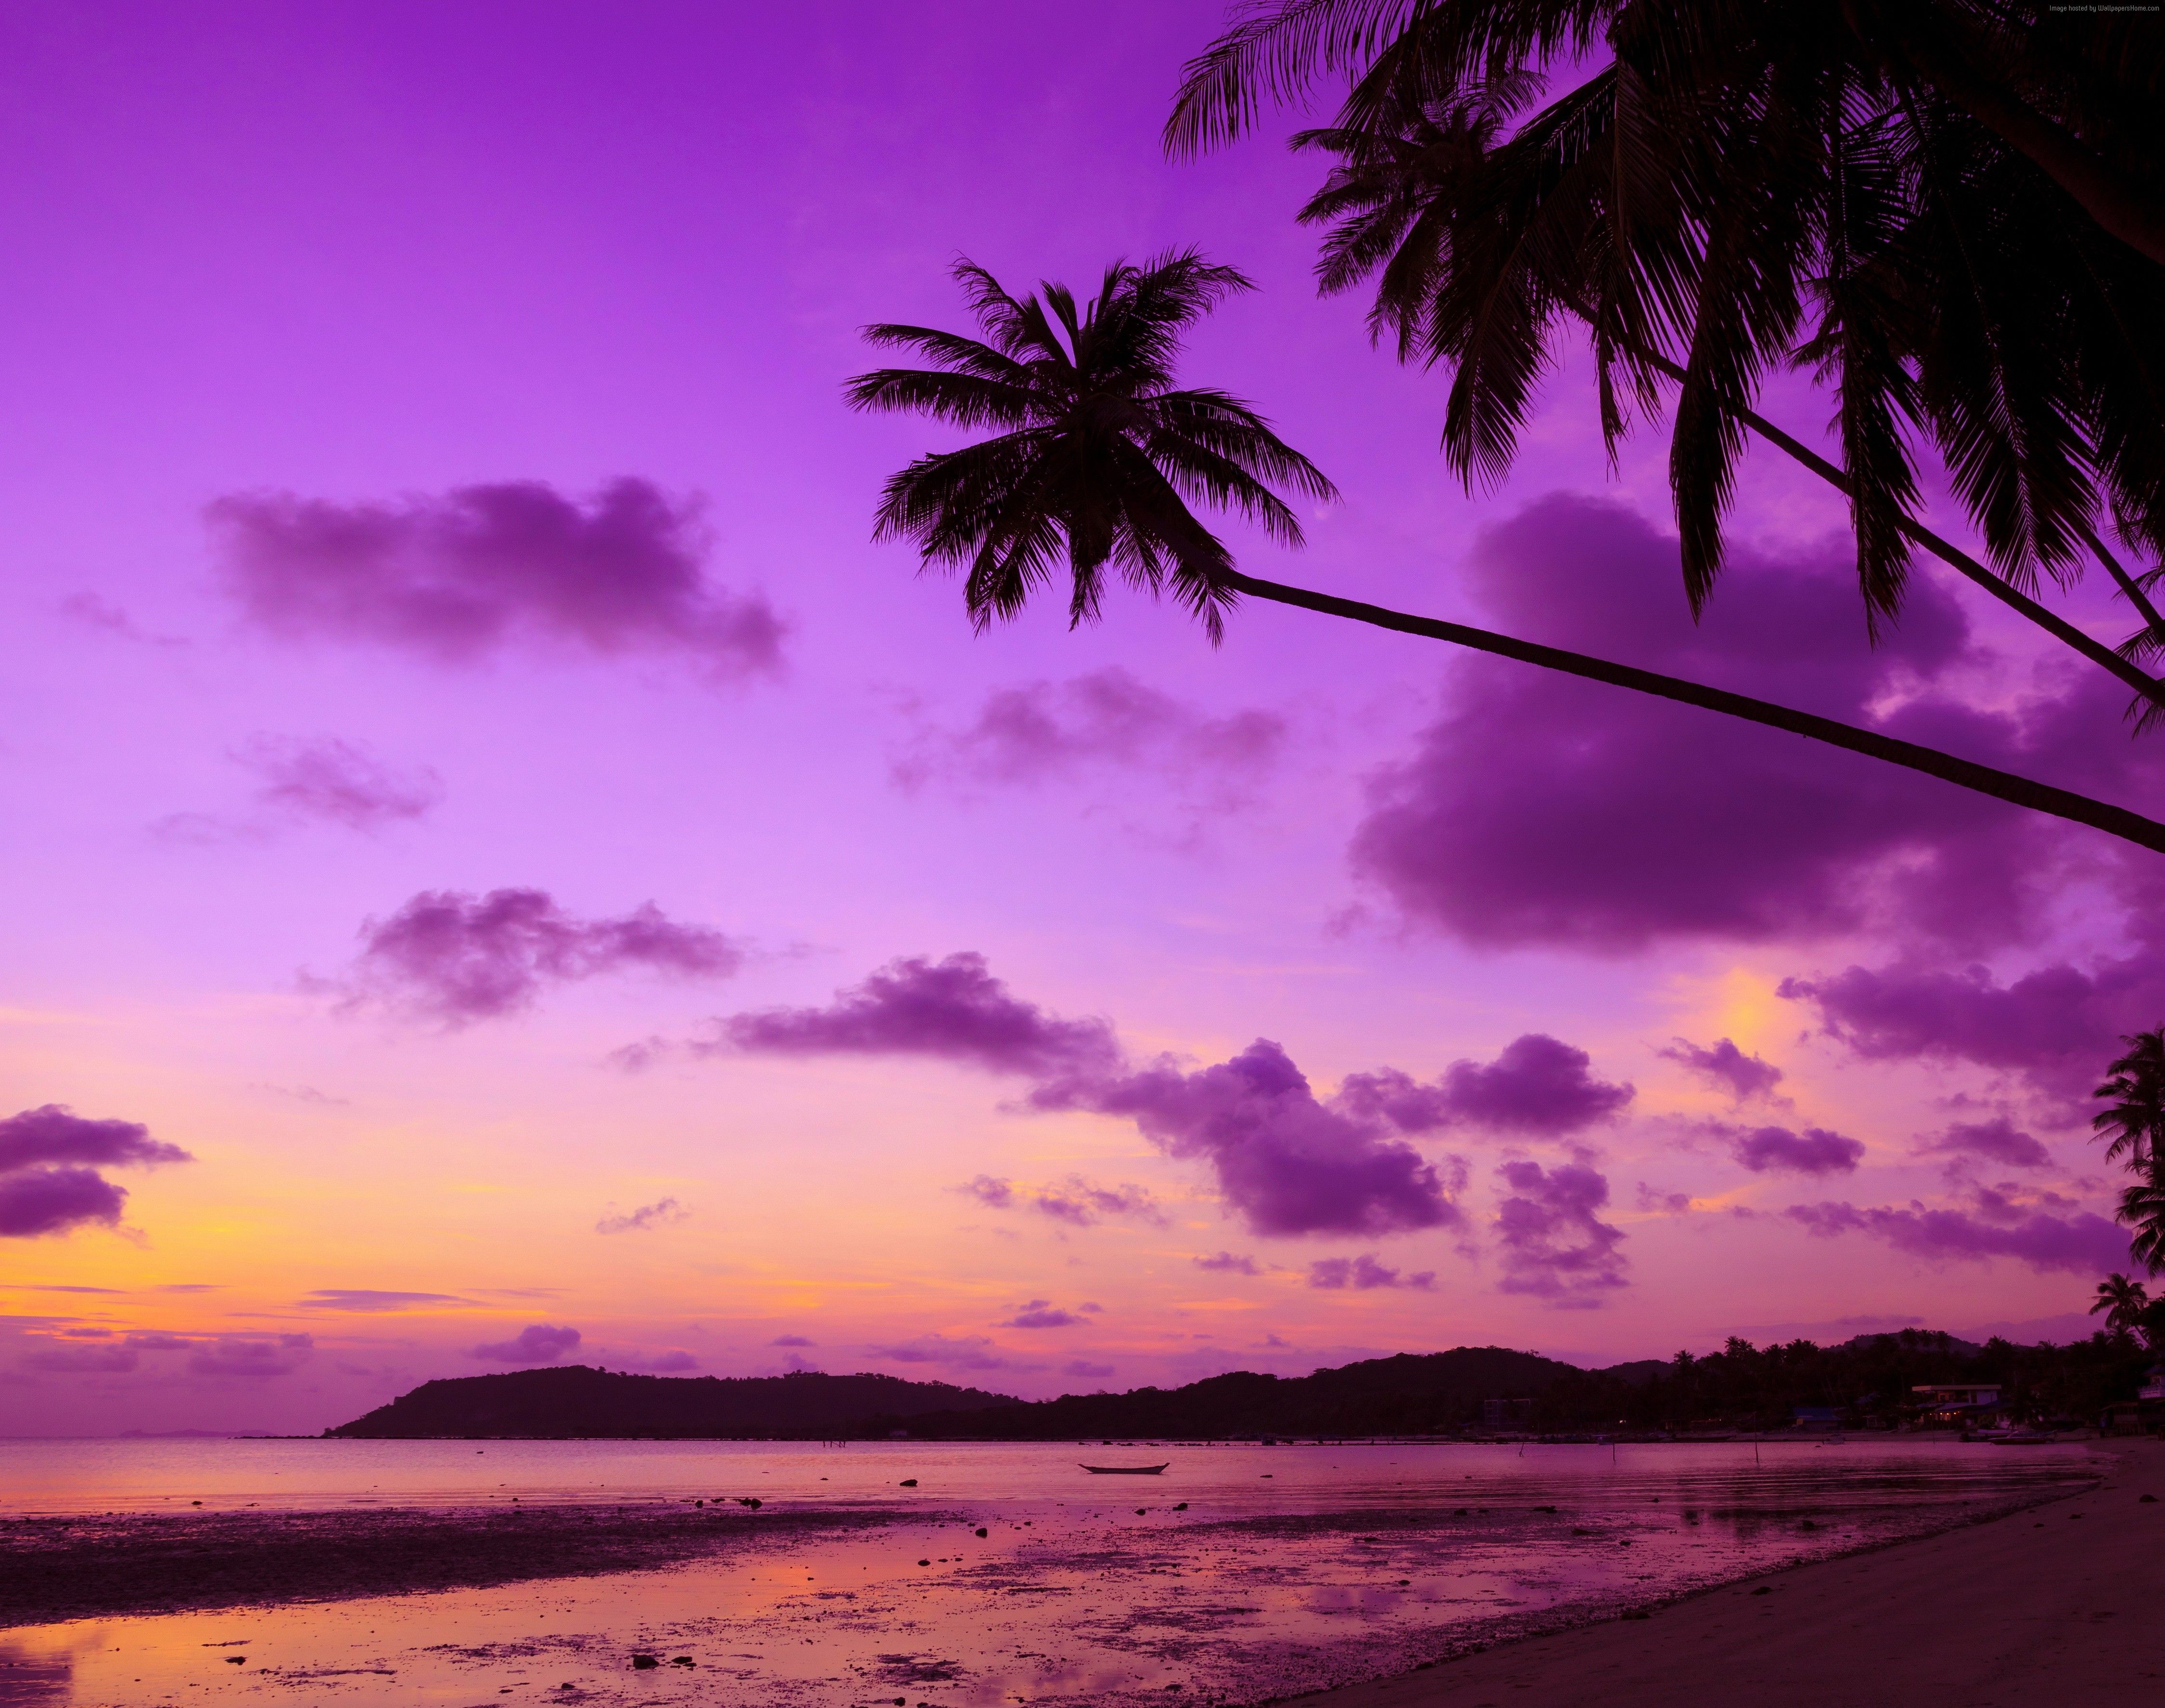 Purple Palm Tree, HD Nature, 4k Wallpaper, Image, Background